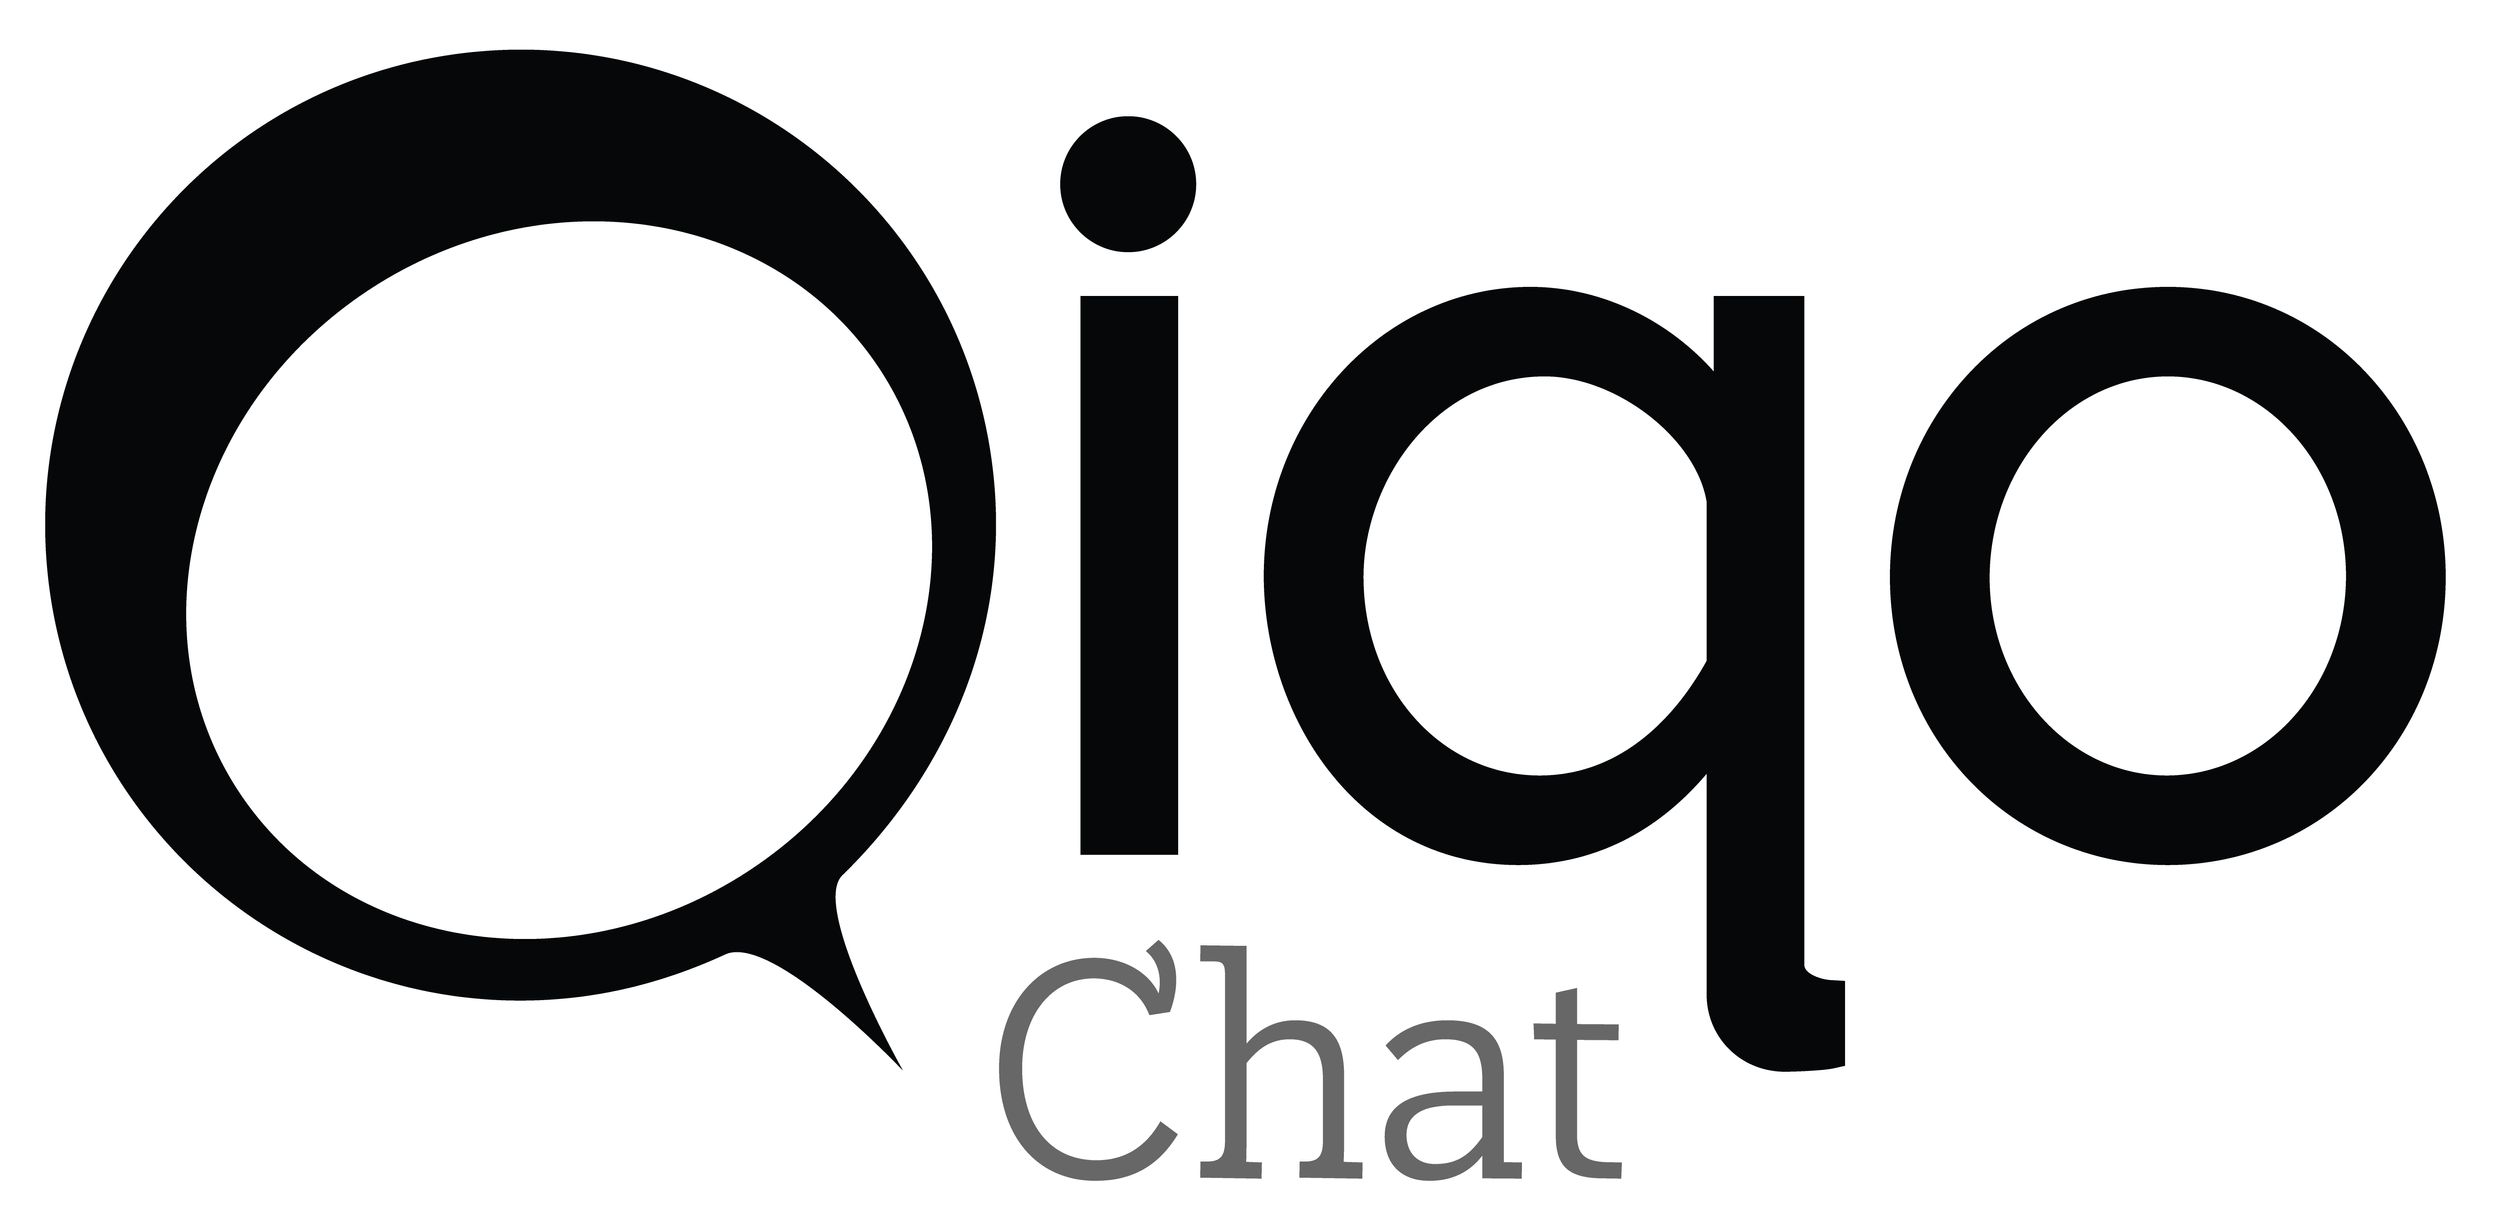 QiqoChat Logo-1dad93dcdfbd82dacb3217577a494c449dc9ccfe995b8a16ed9d0f8c67cf7989.png